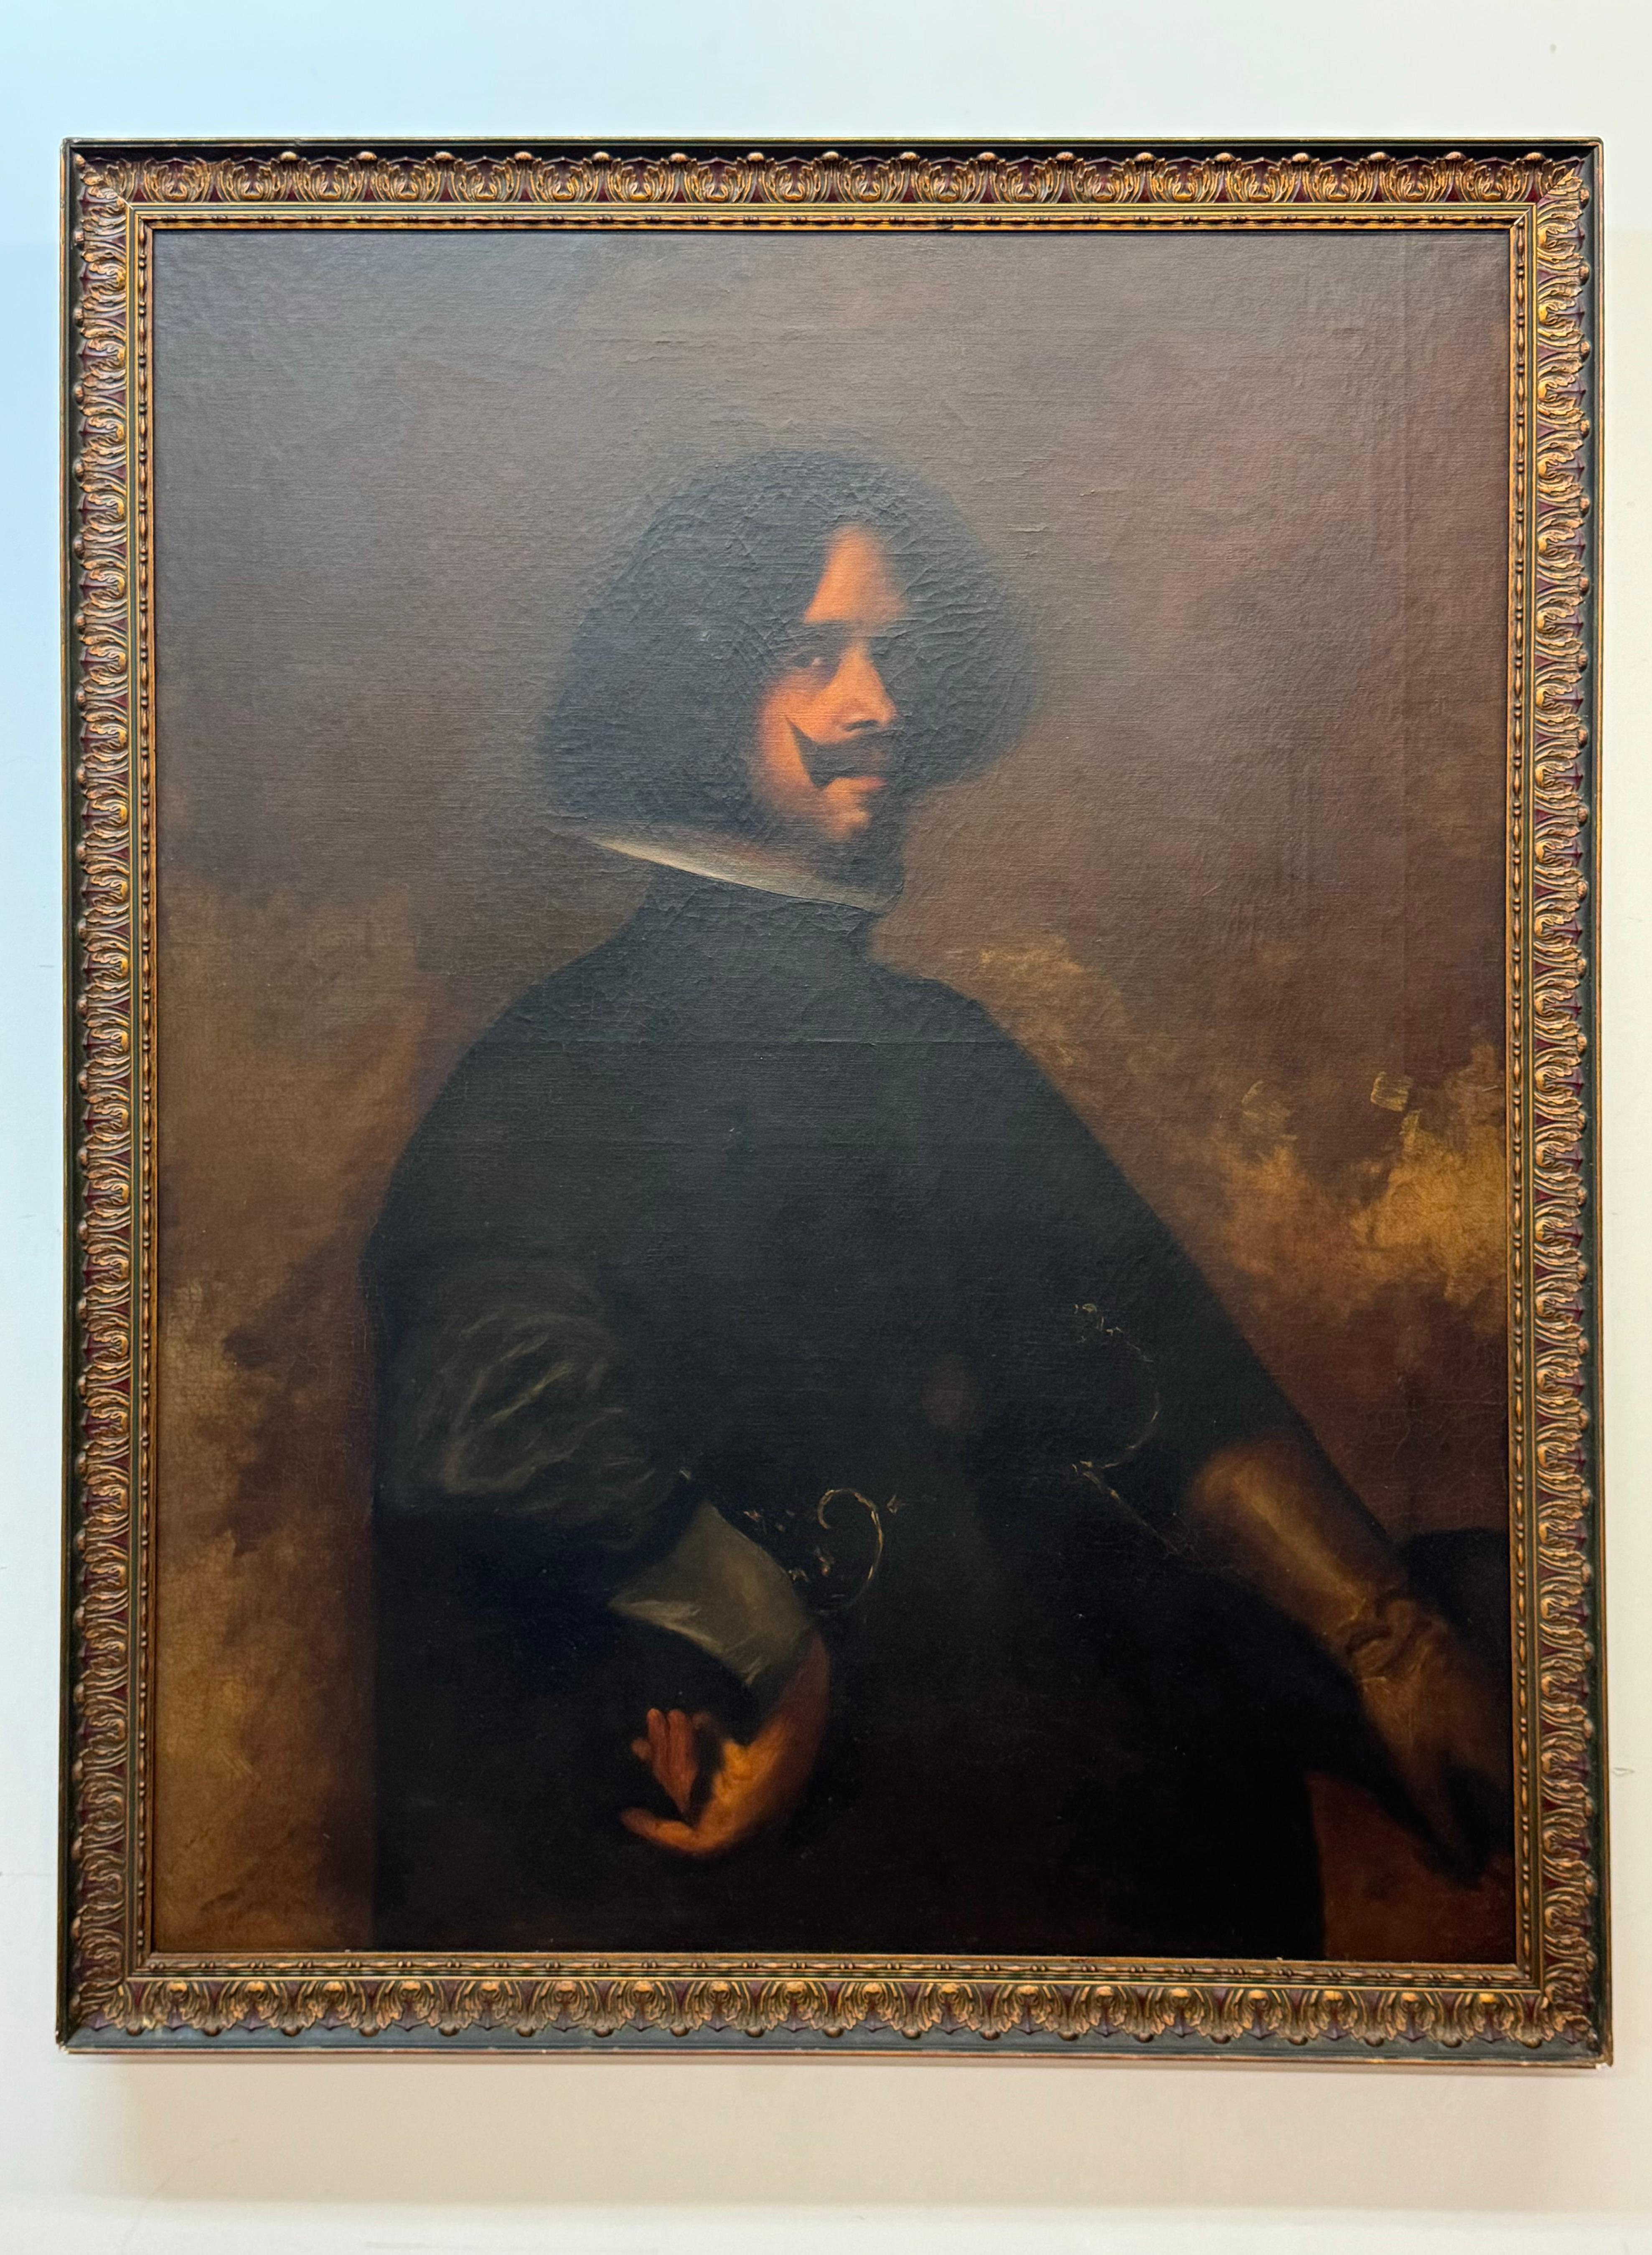 Self portrait after Diego Velasquez - Painting by After Diego Velazquez